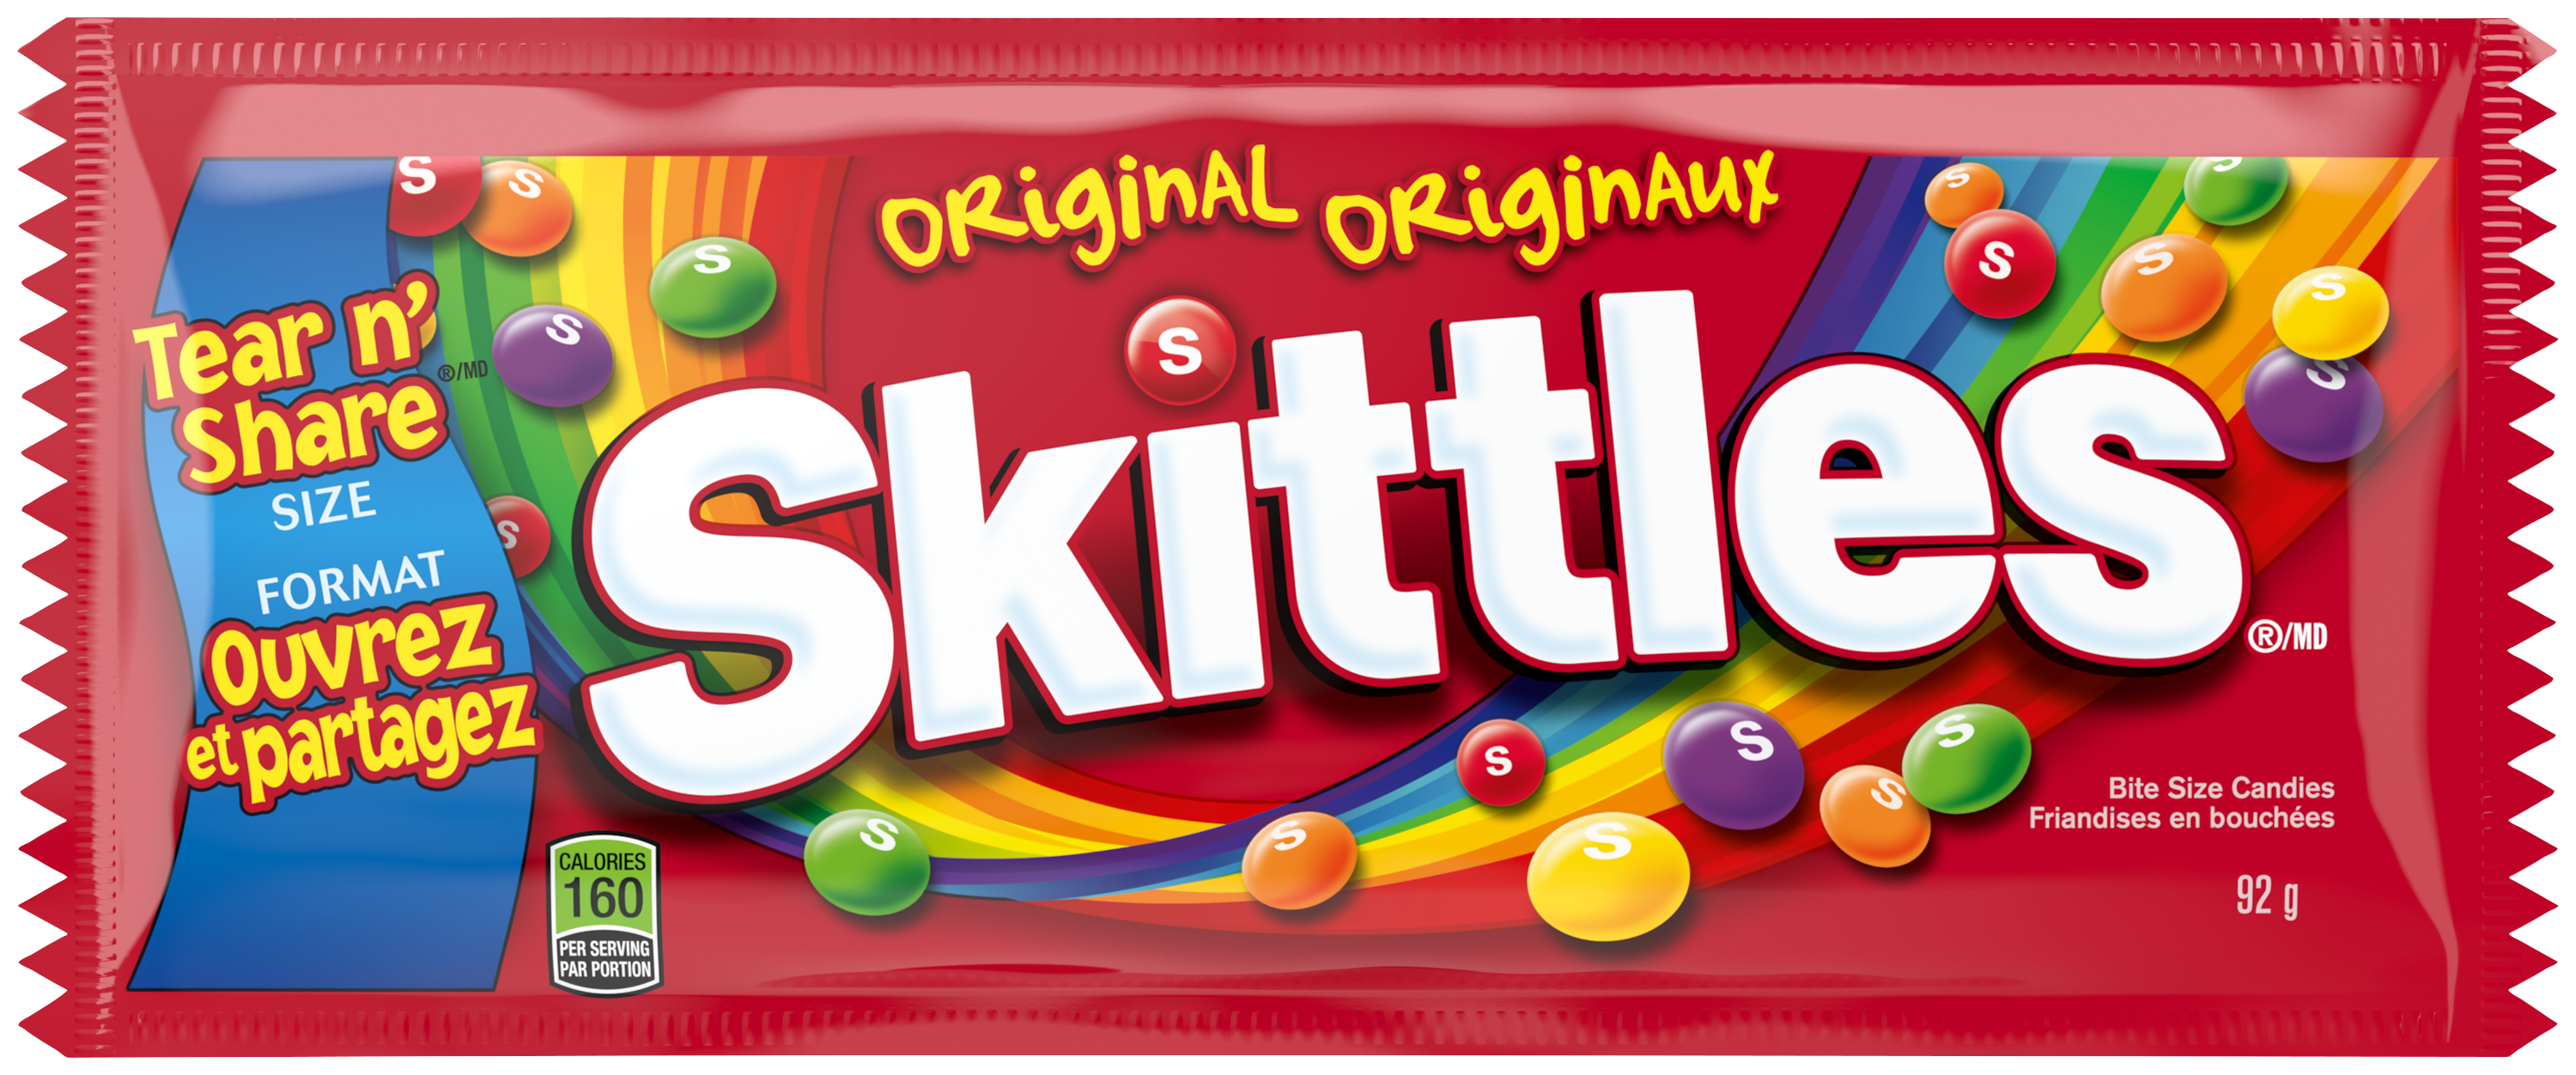 SKITTLES Original Fruity Candy Sharing Size, 92g